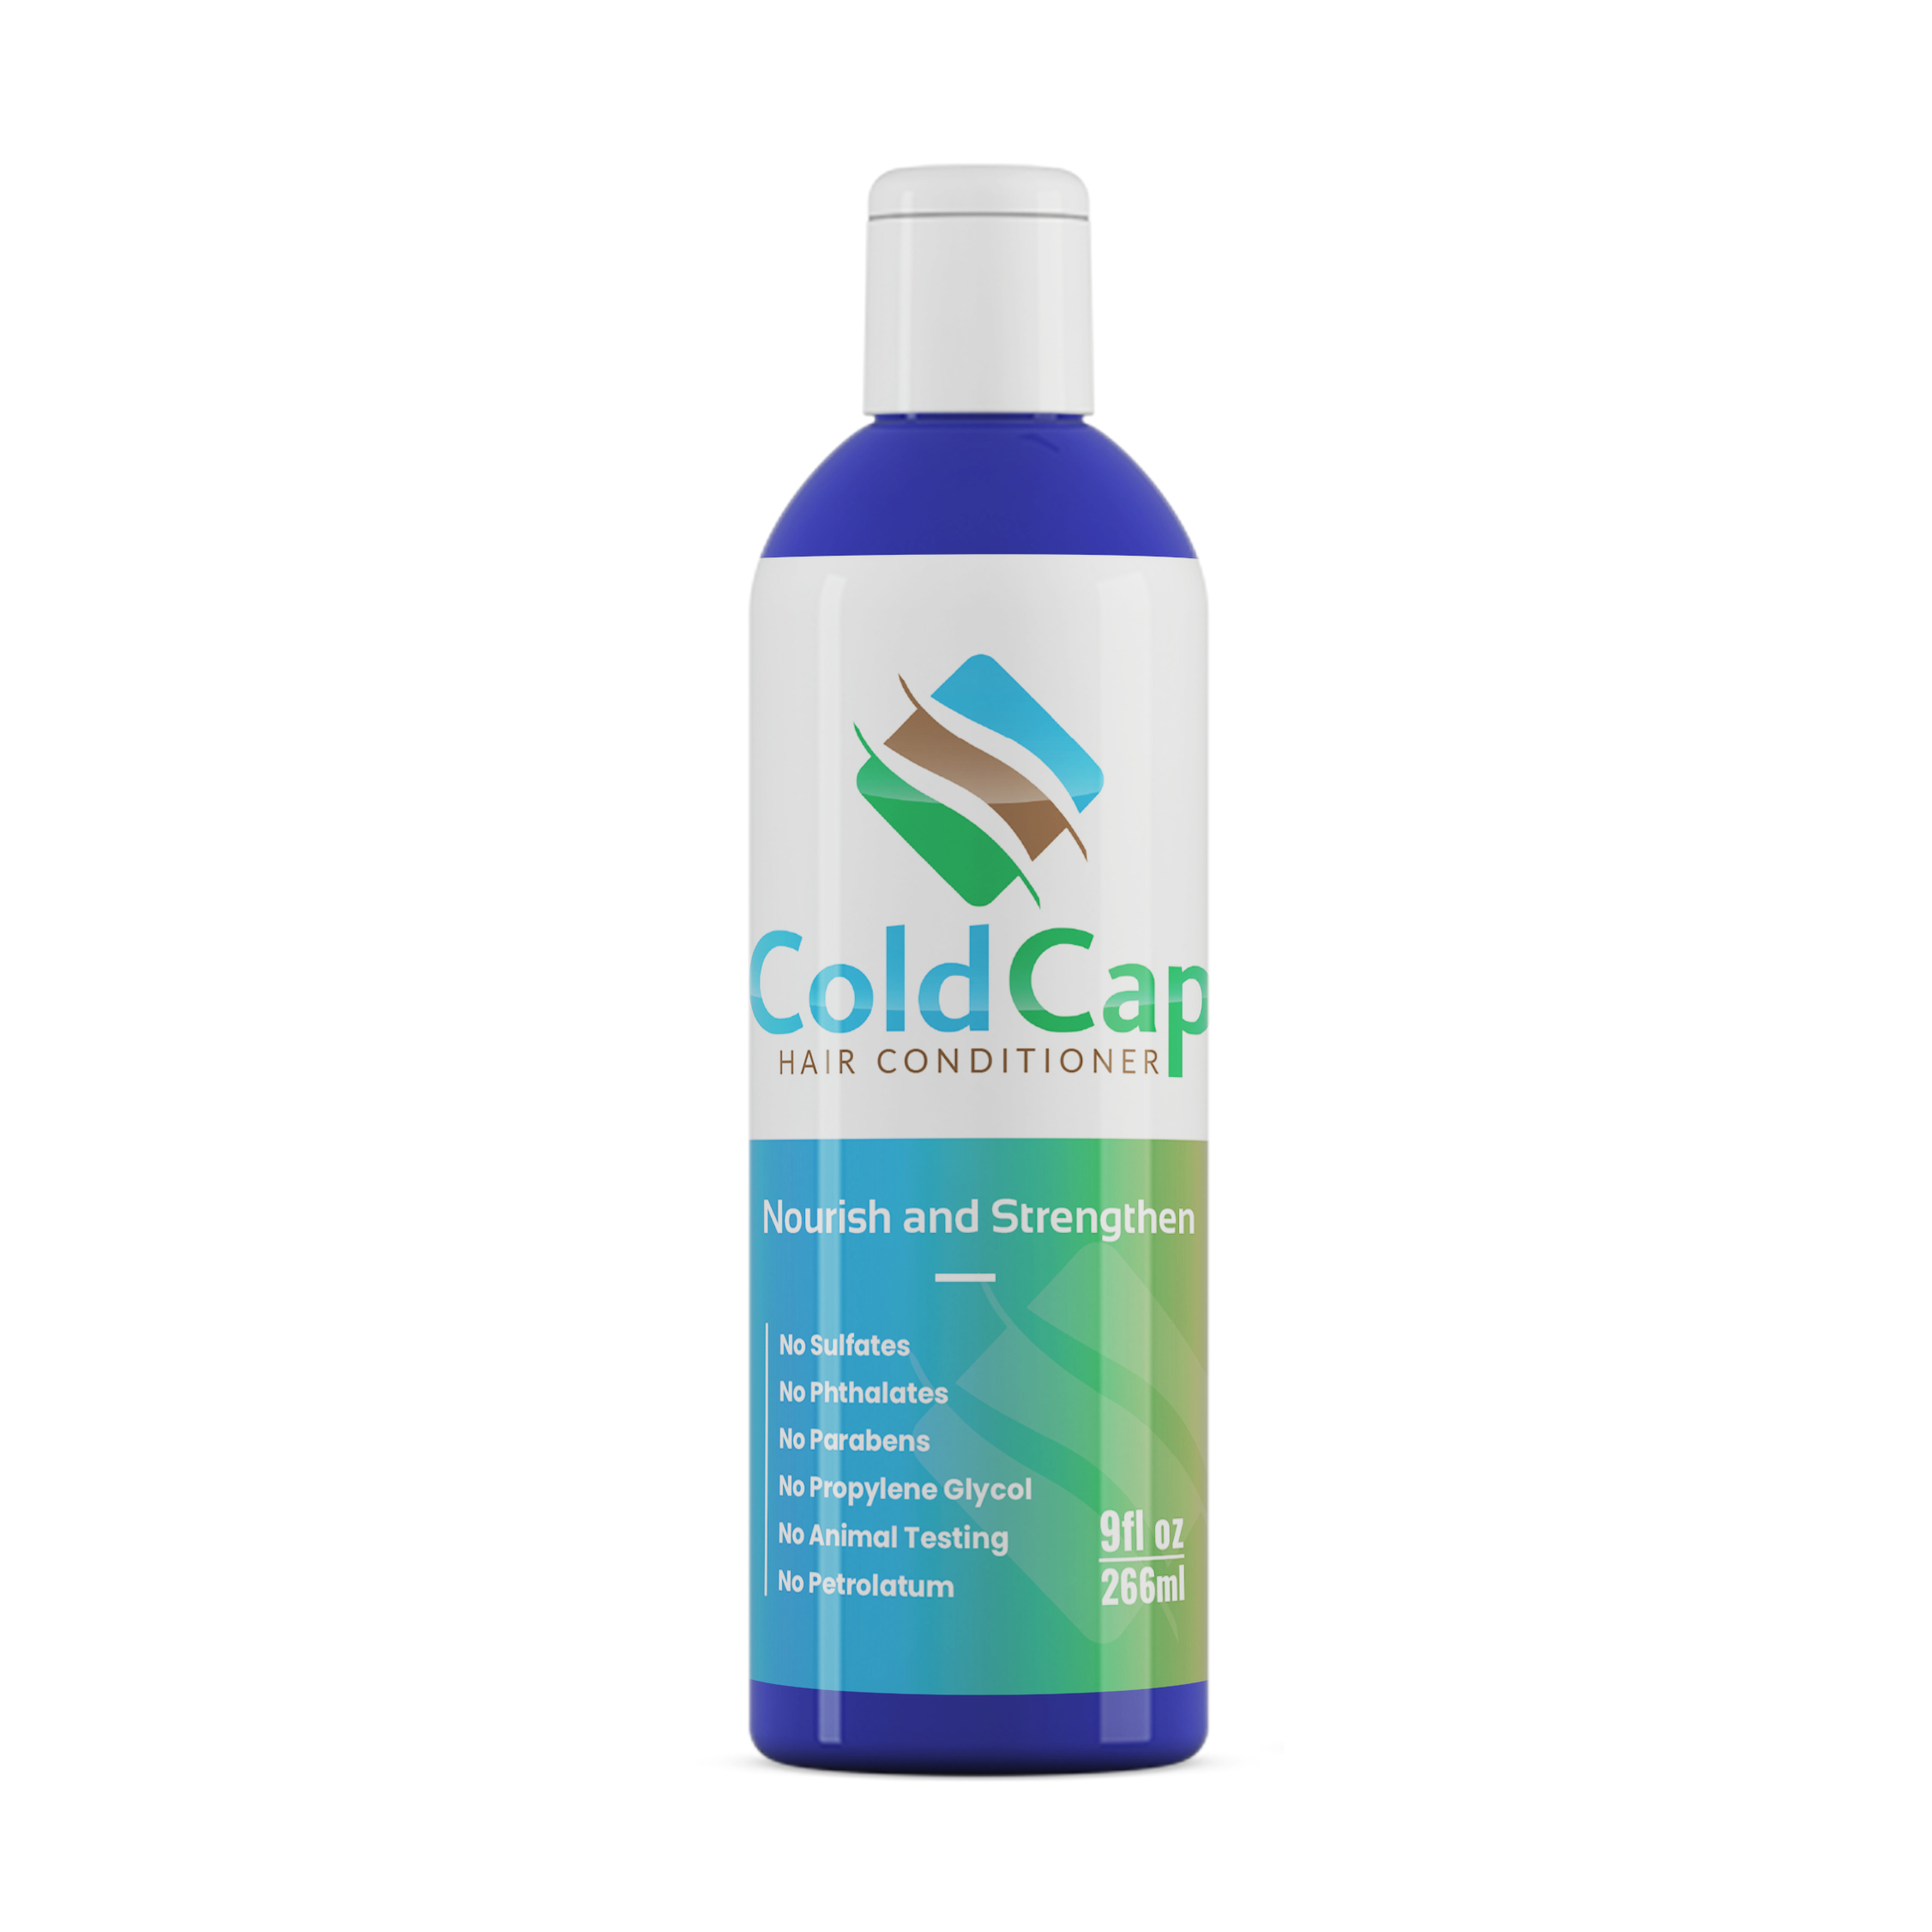 Cold Cap Hair Conditioner